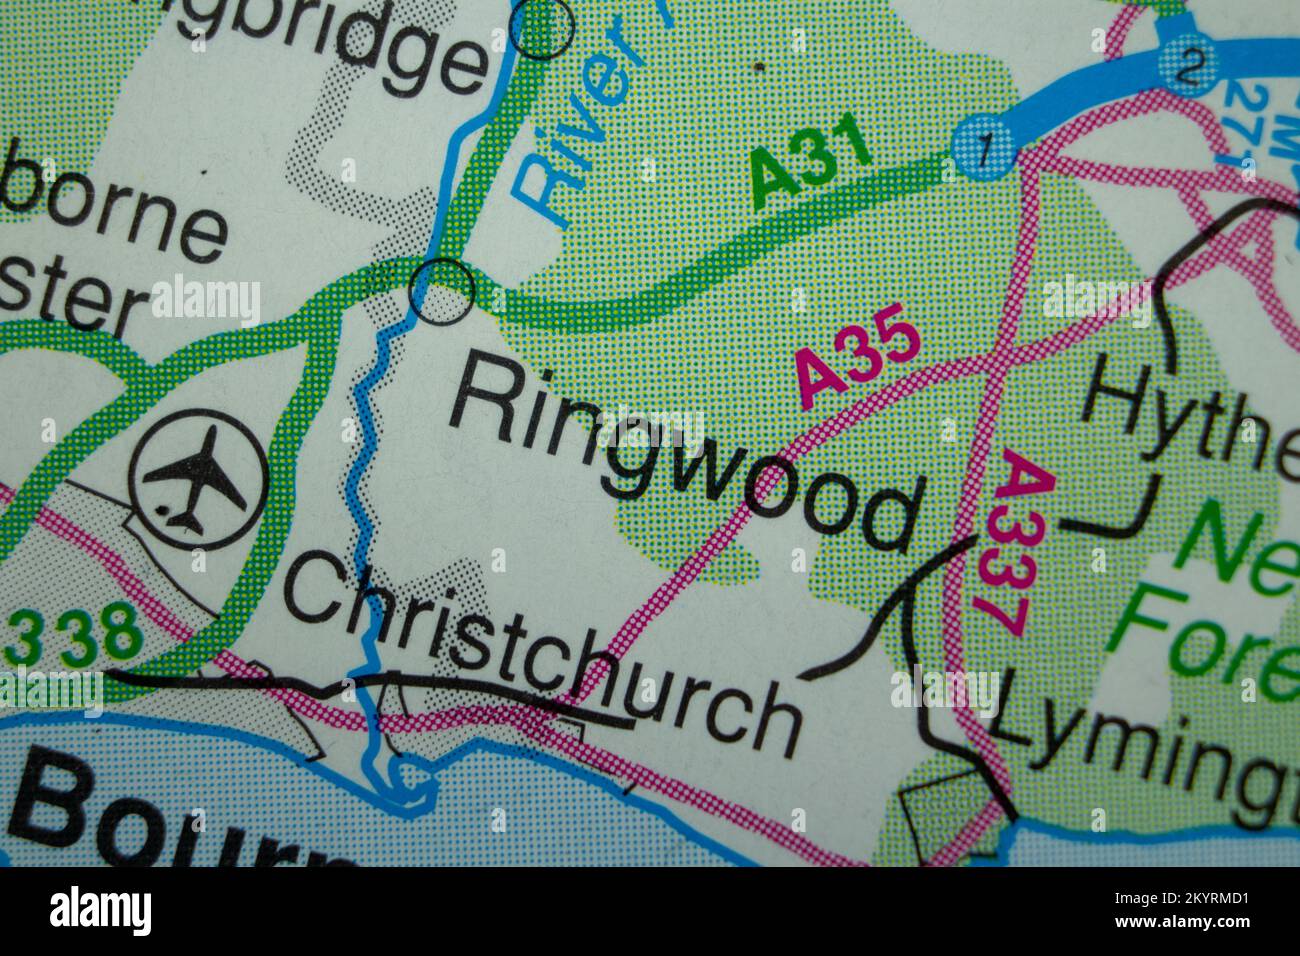 Ringwood, United Kingdom atlas map town name Stock Photo